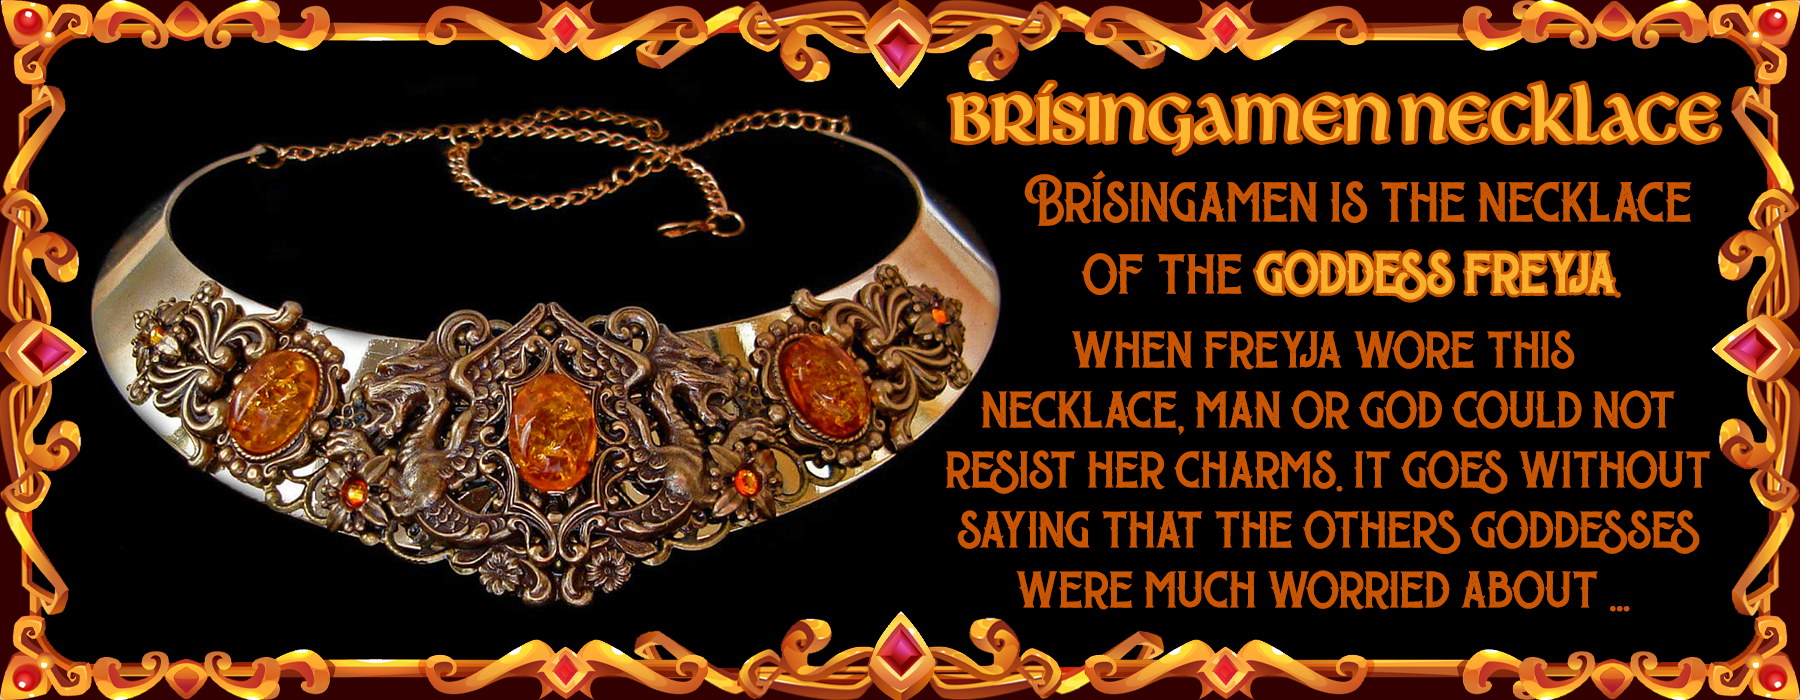 The legend of Brisingamen Necklace - the mythical necklace of Freyja's Goddess